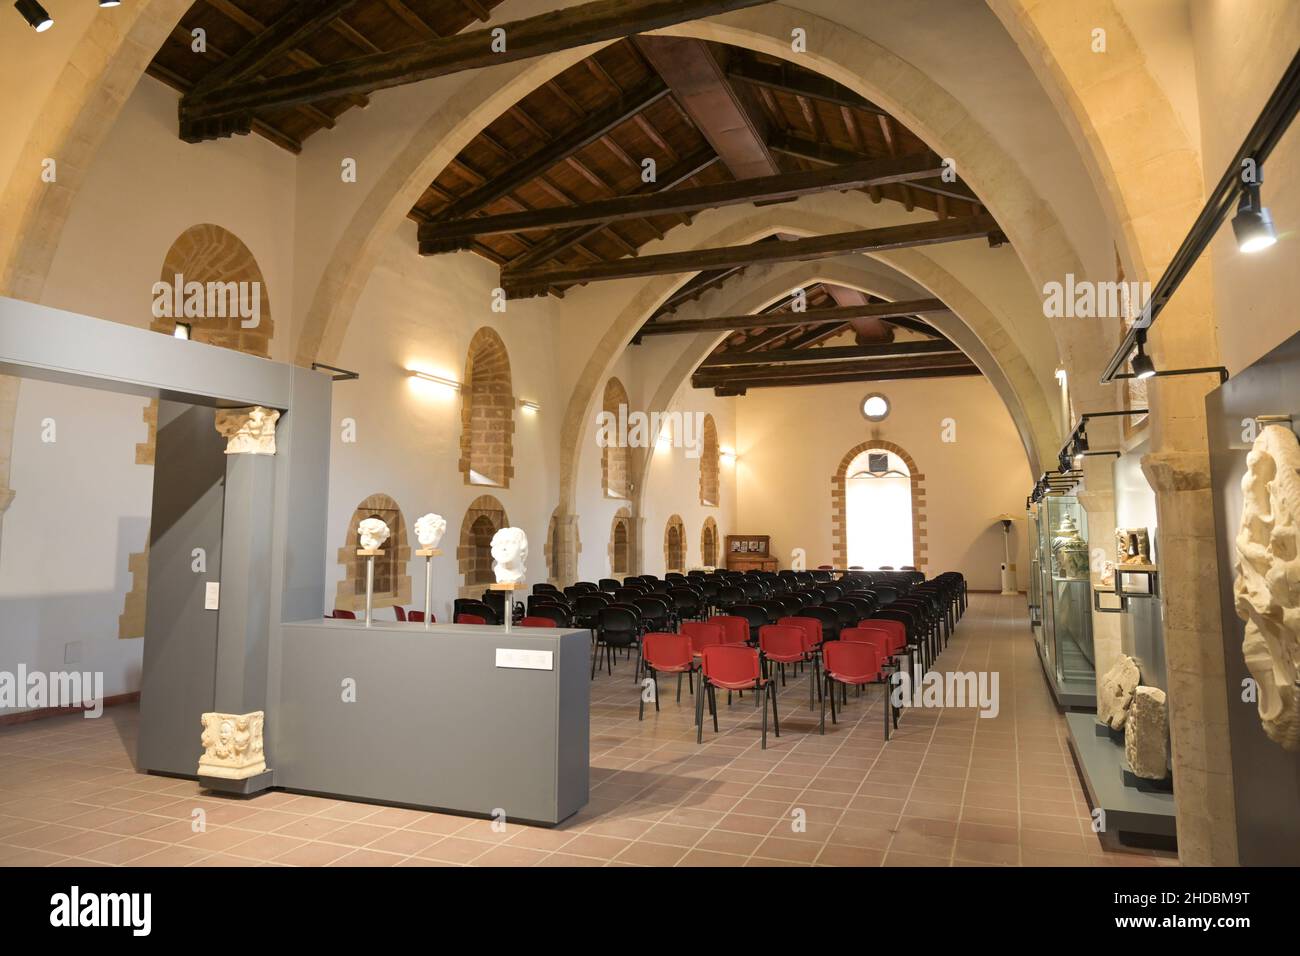 Ehemaliges Dormitorium (Schlafsaal), Festsaal, Zisterzienserkloster 'Monache cistercensi santo spirito', Agrigent, Sizilien, Italien Stock Photo